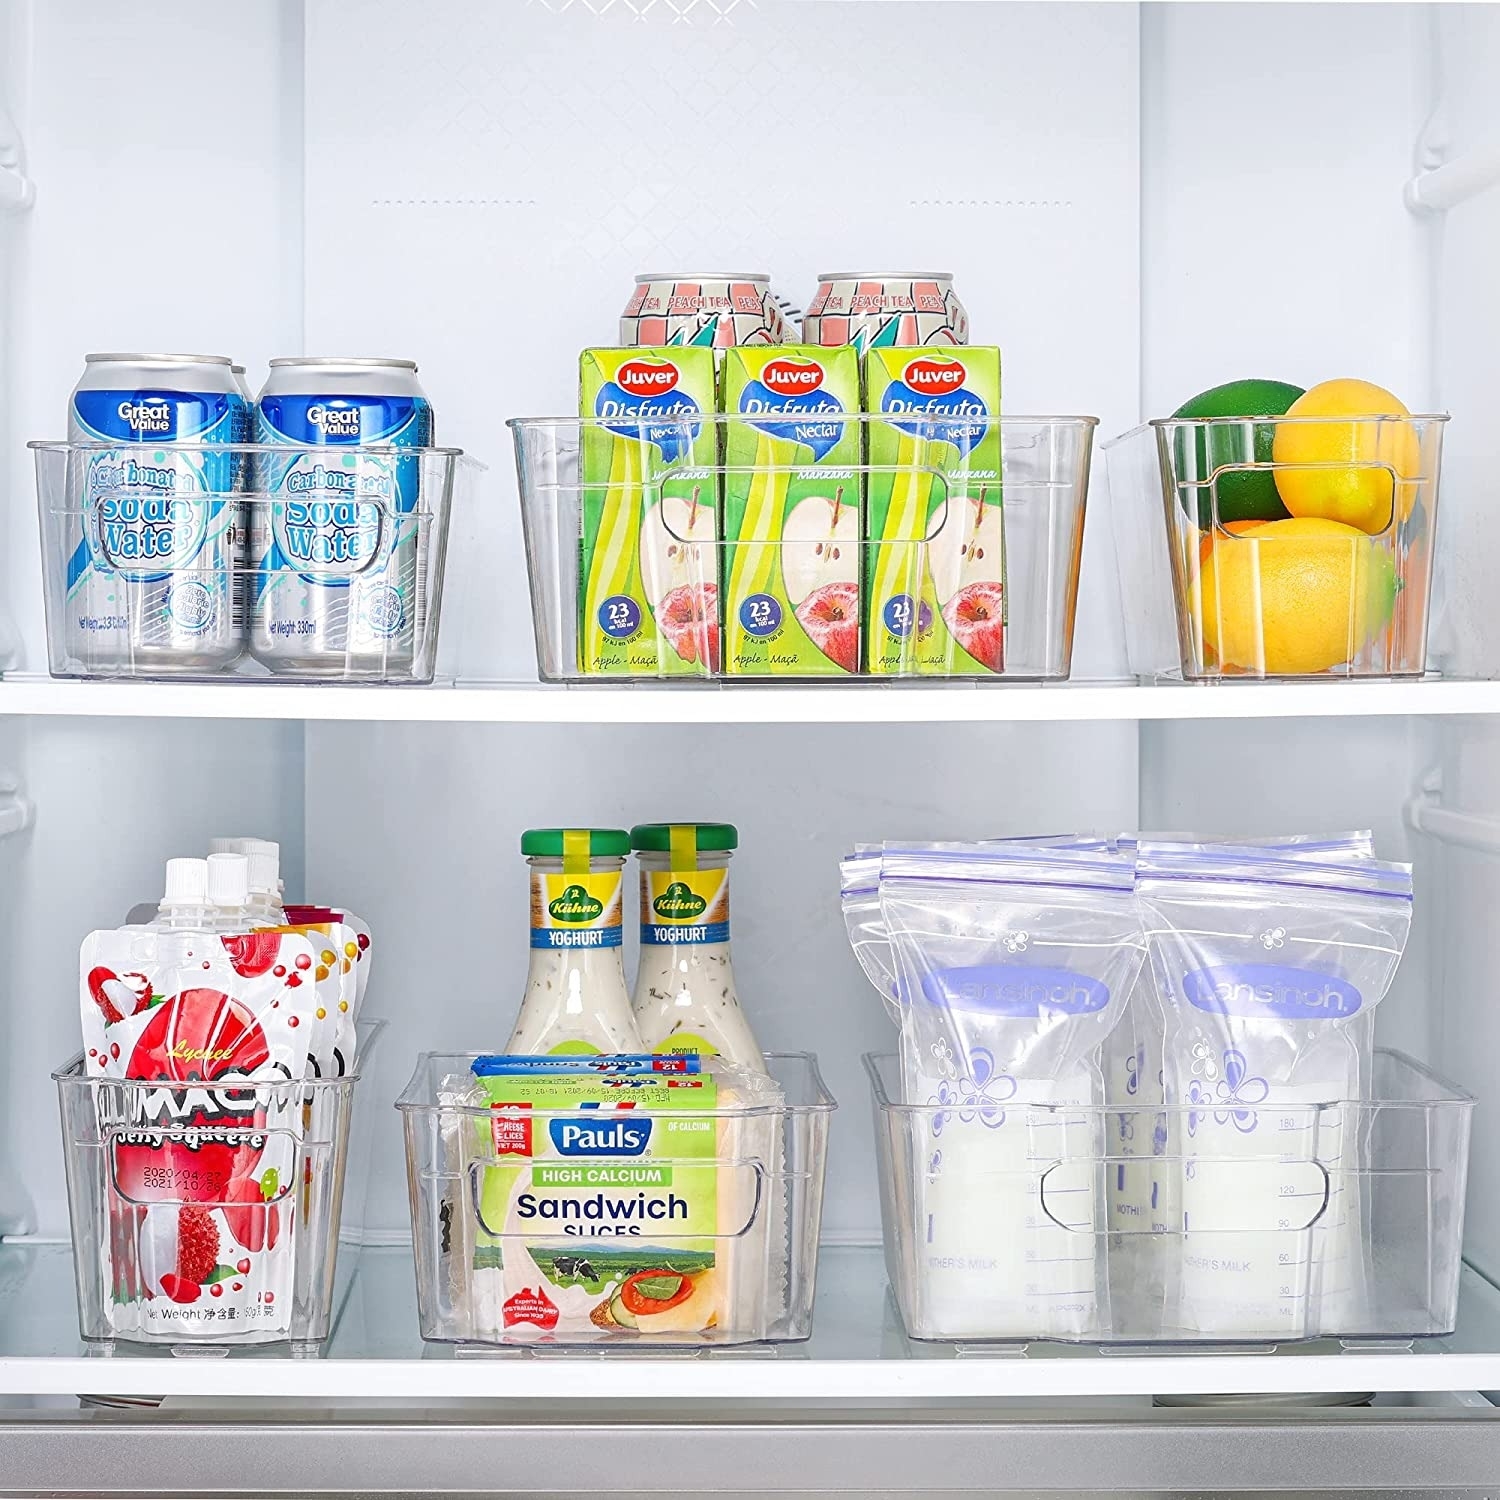 Storage bins with food inside a refrigerator.